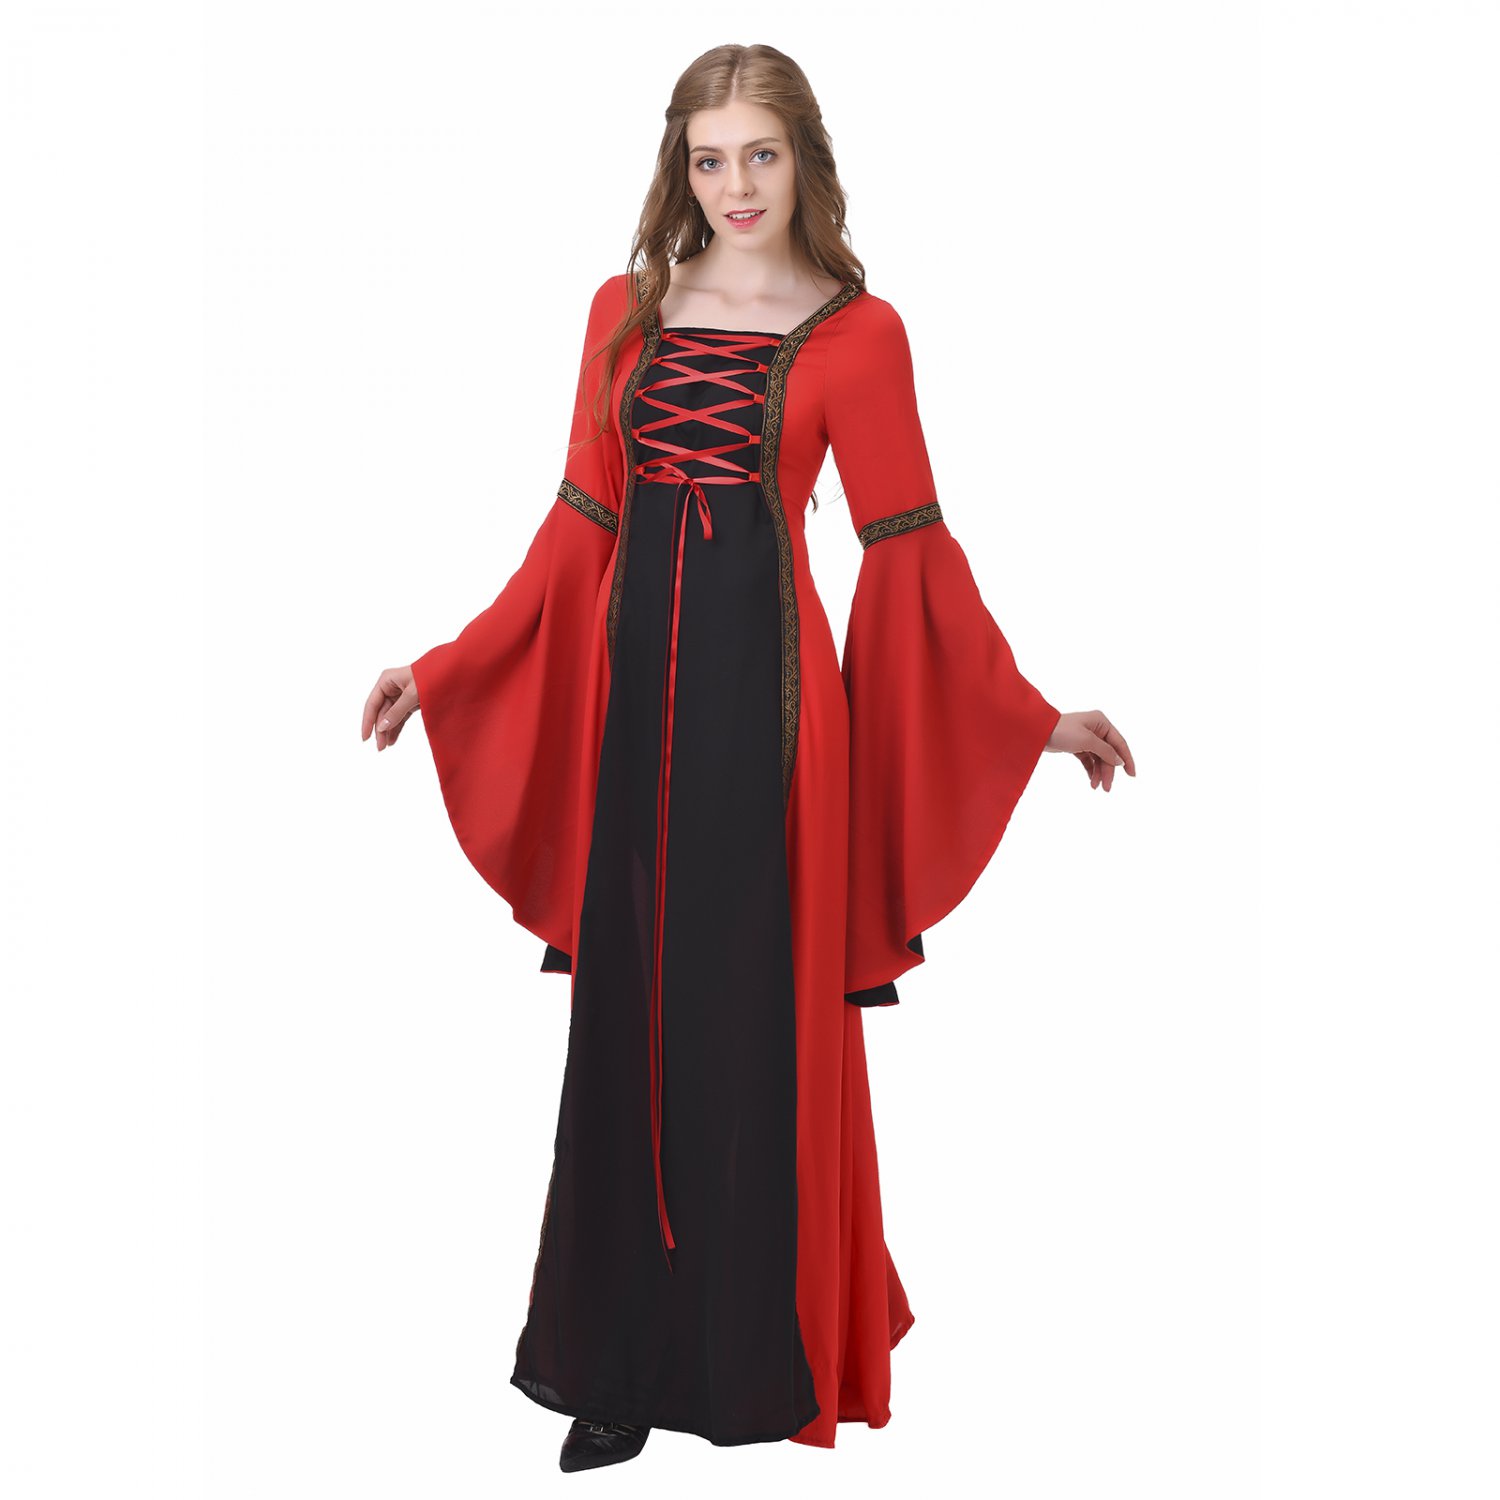 Cosplaydiy European medieval/renaissance dress custom made for party